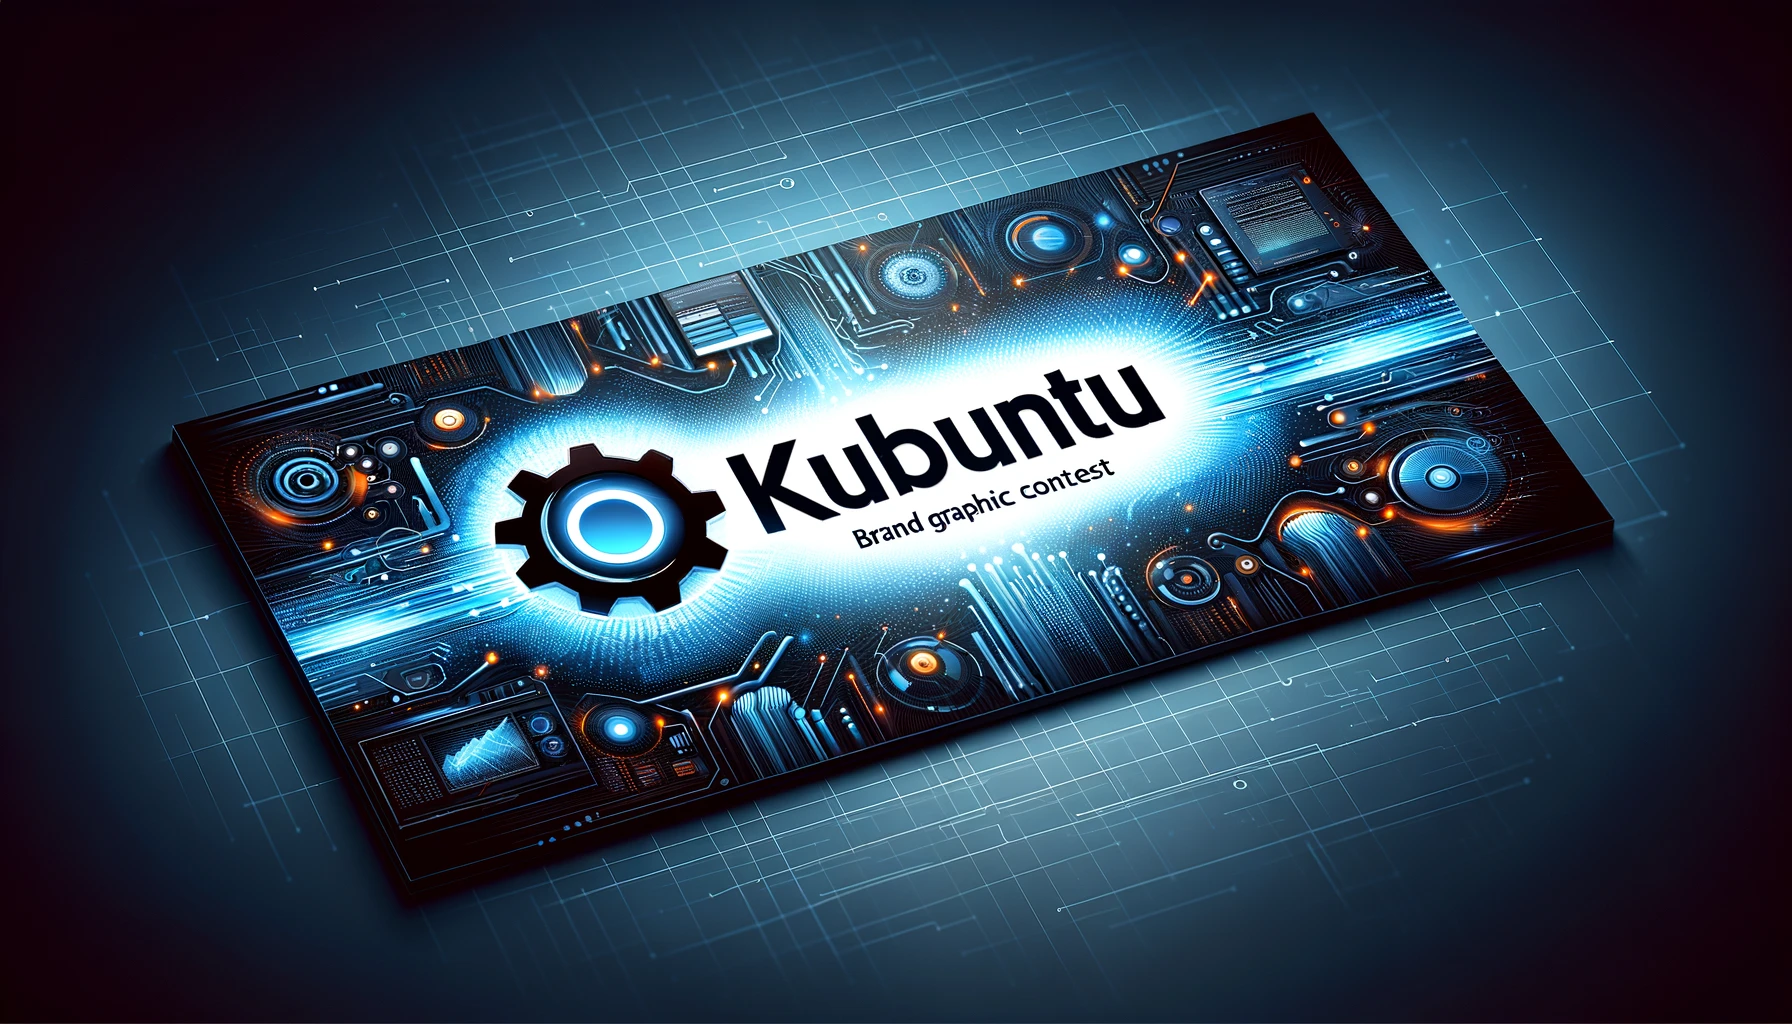 image from Kubuntu Graphic Design Contest